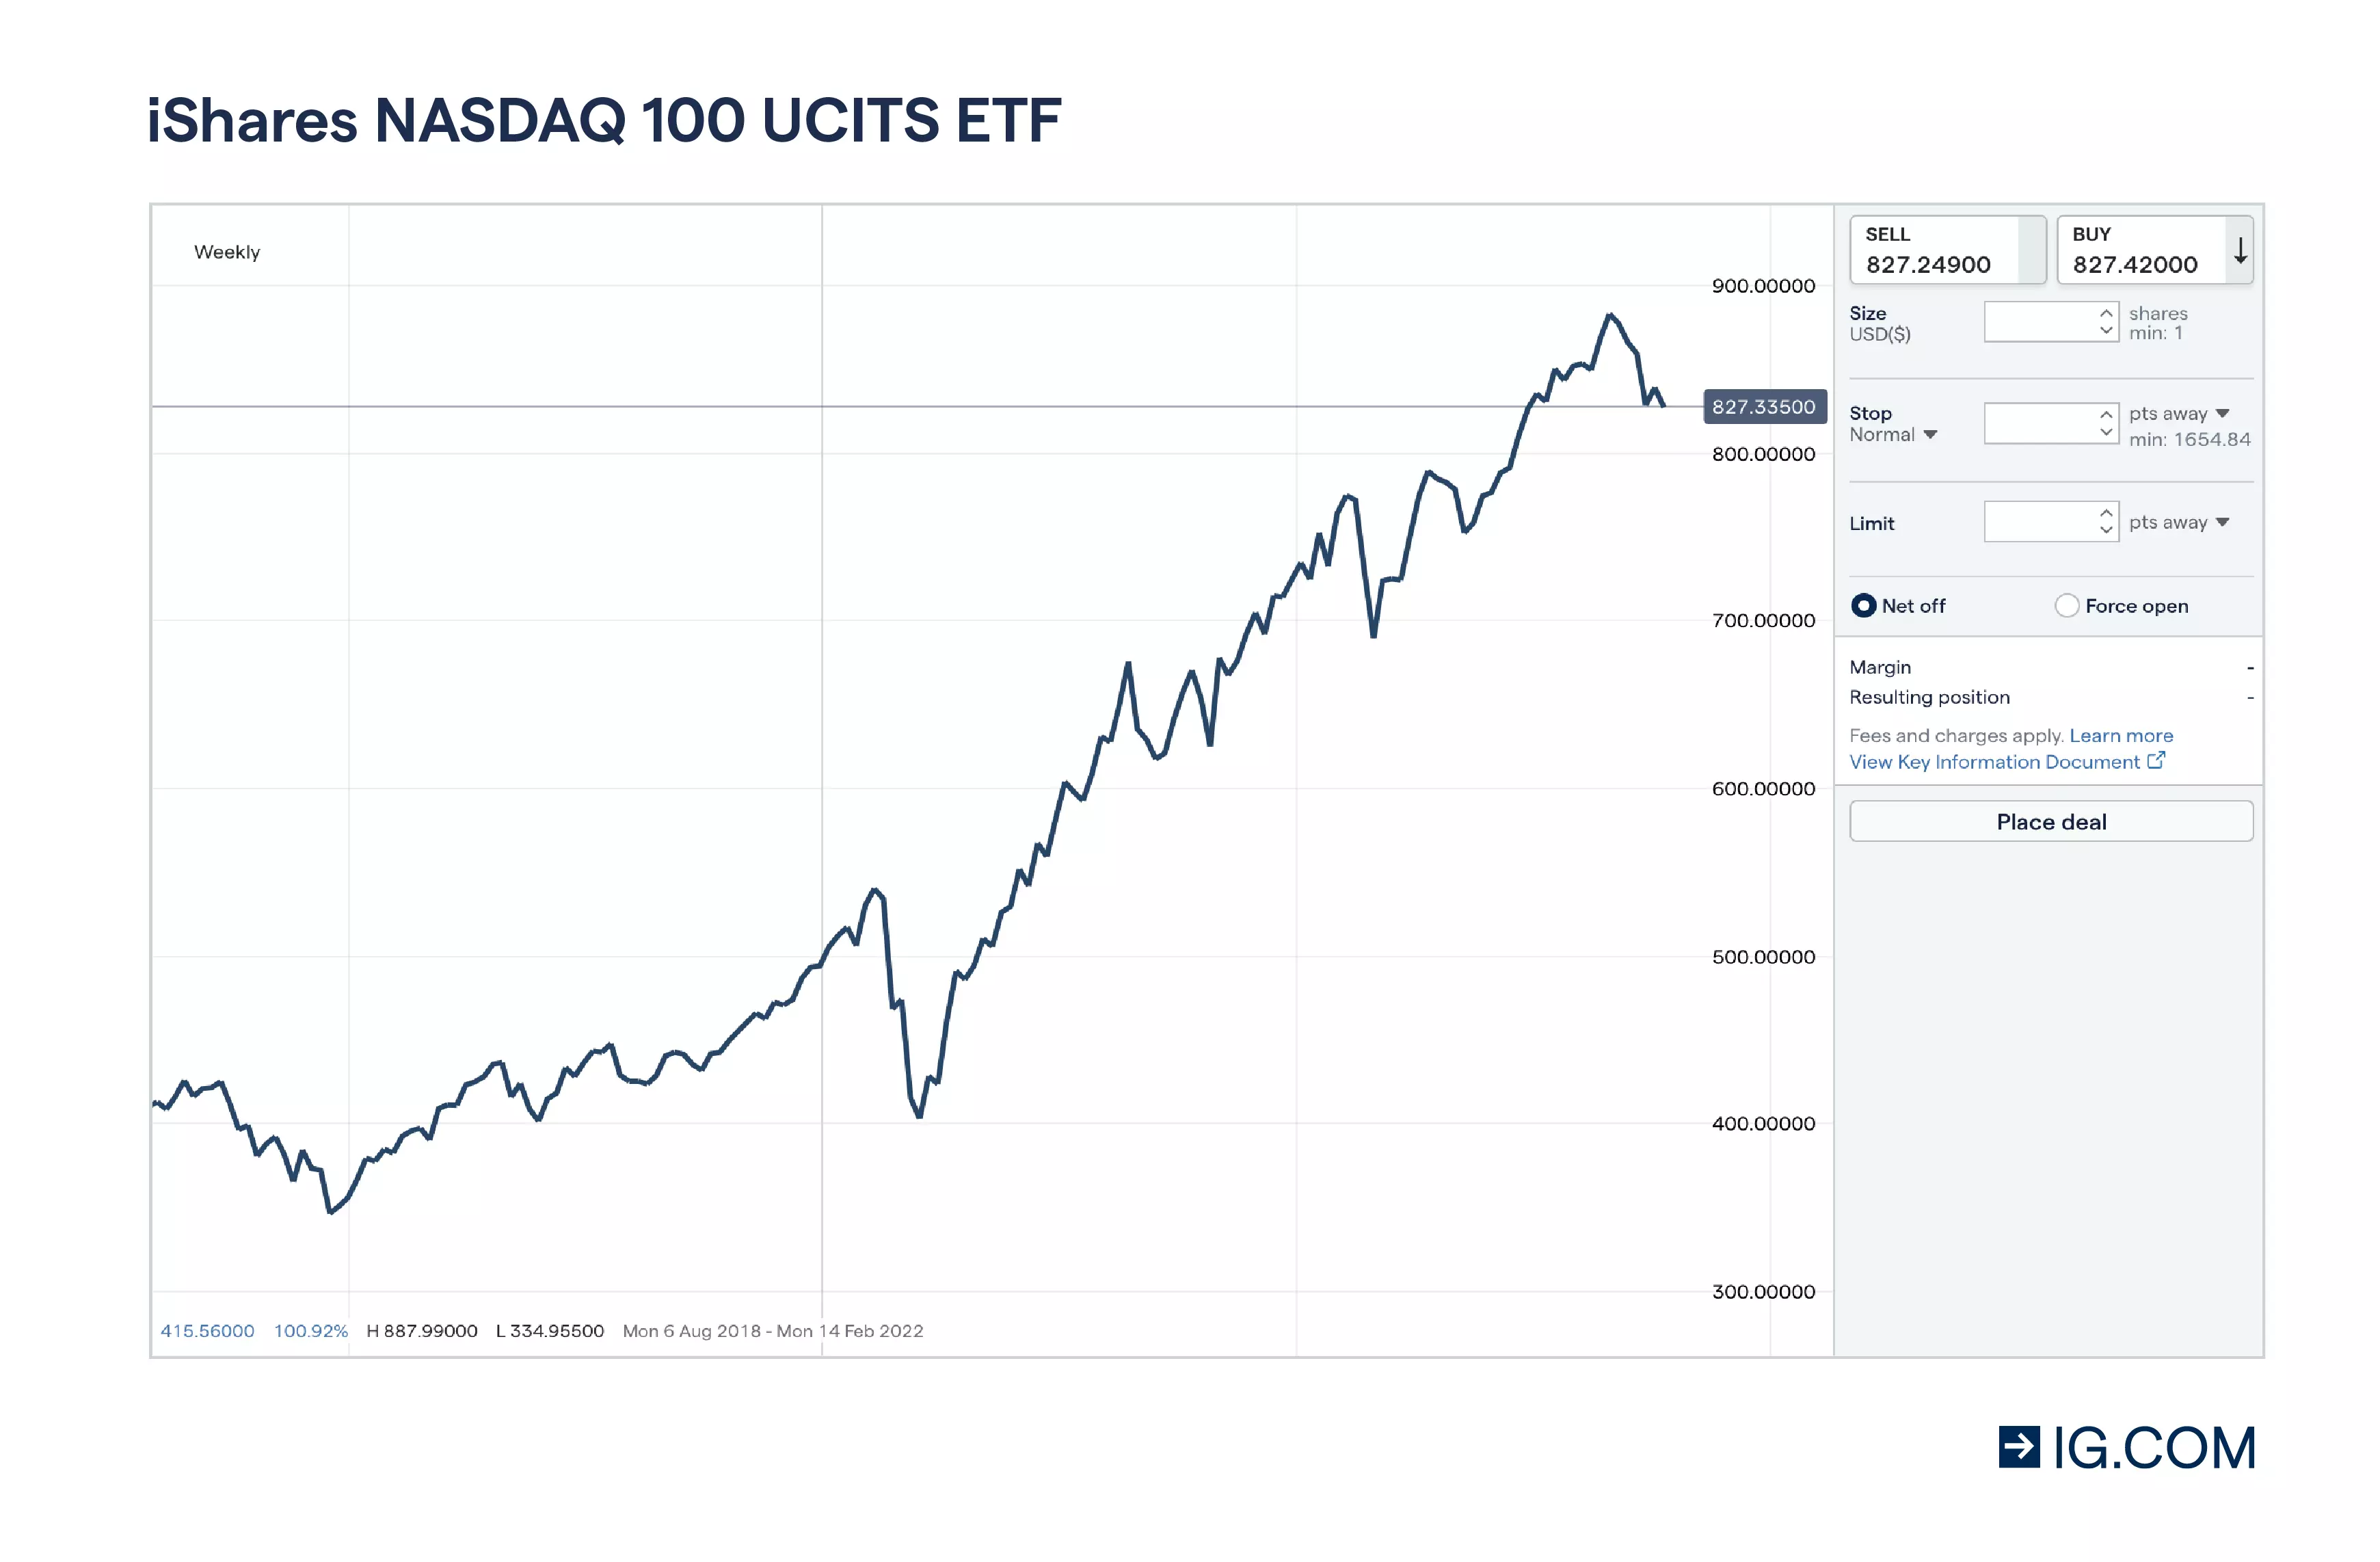 NASDAQ: CFD on ETFs